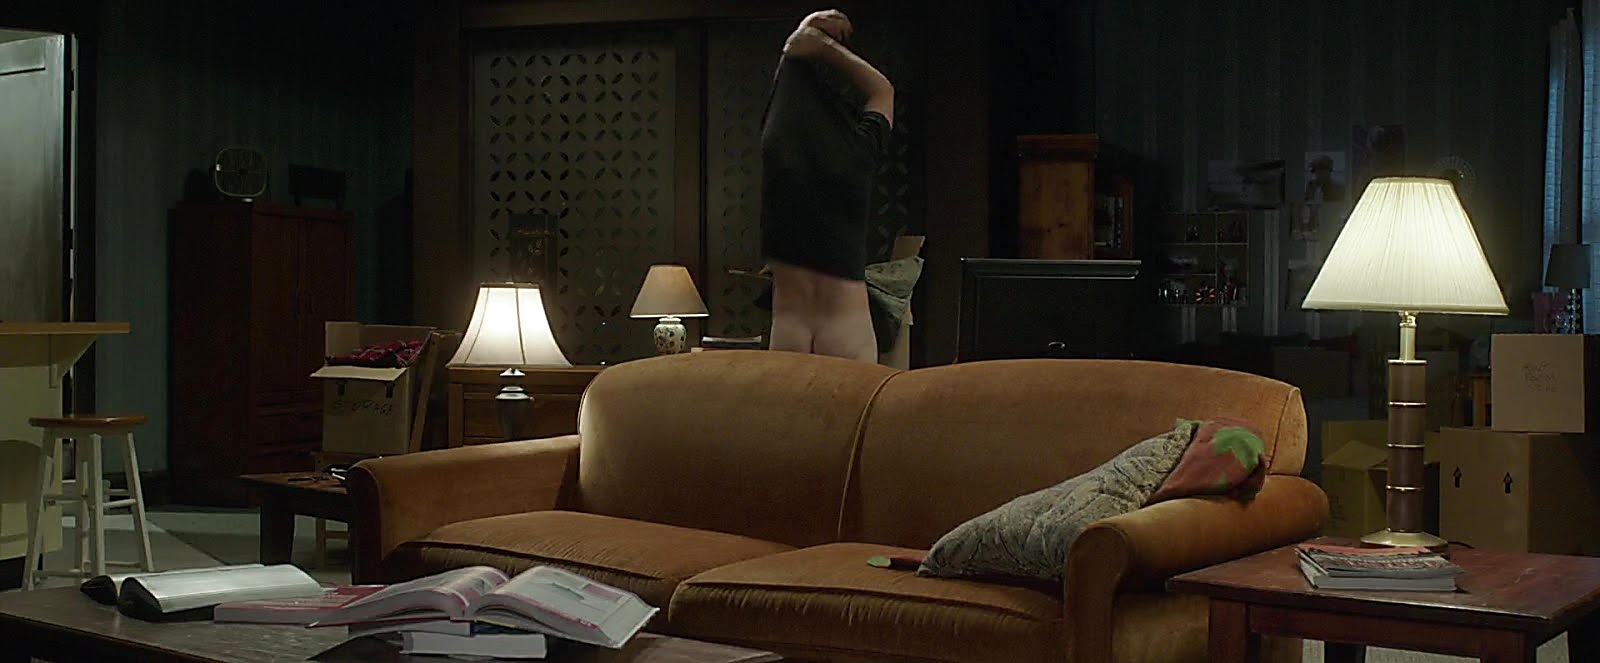 Greg Kinnear sexy shirtless scene August 17, 2019, 1pm. 